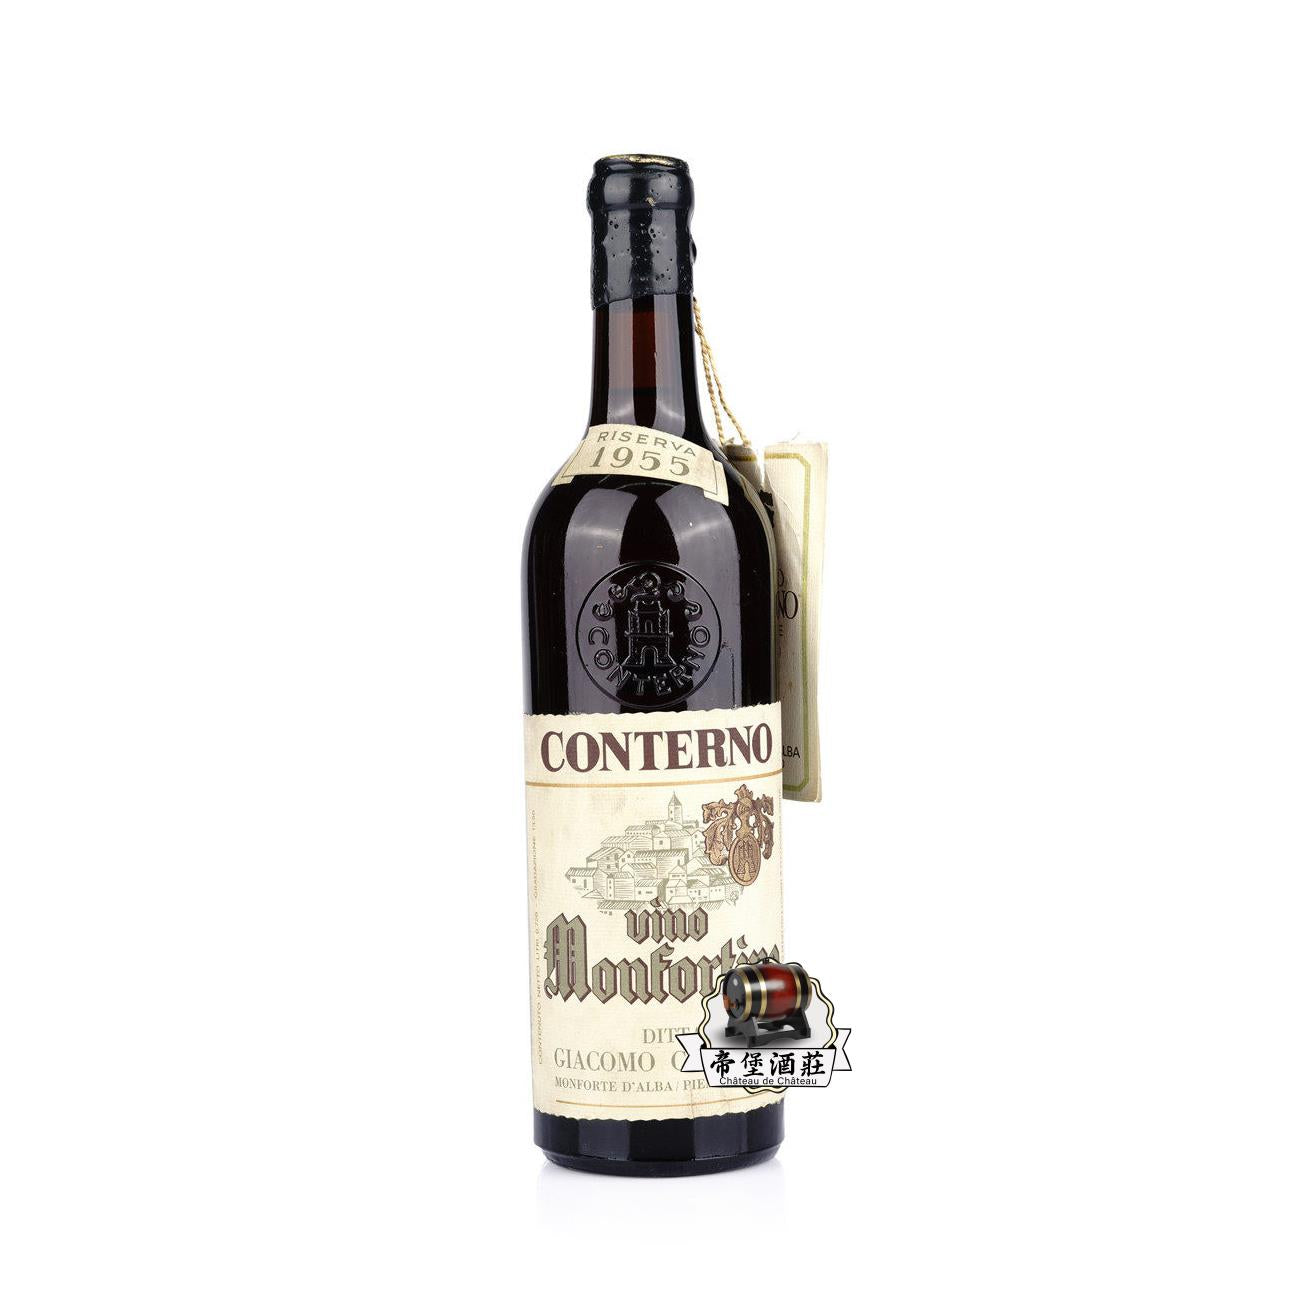 回收1955 Giacomo Conterno Monfortino, Barolo Riserva 贾科莫·康特诺酒庄 梦芳蒂诺·珍酿巴罗洛1955